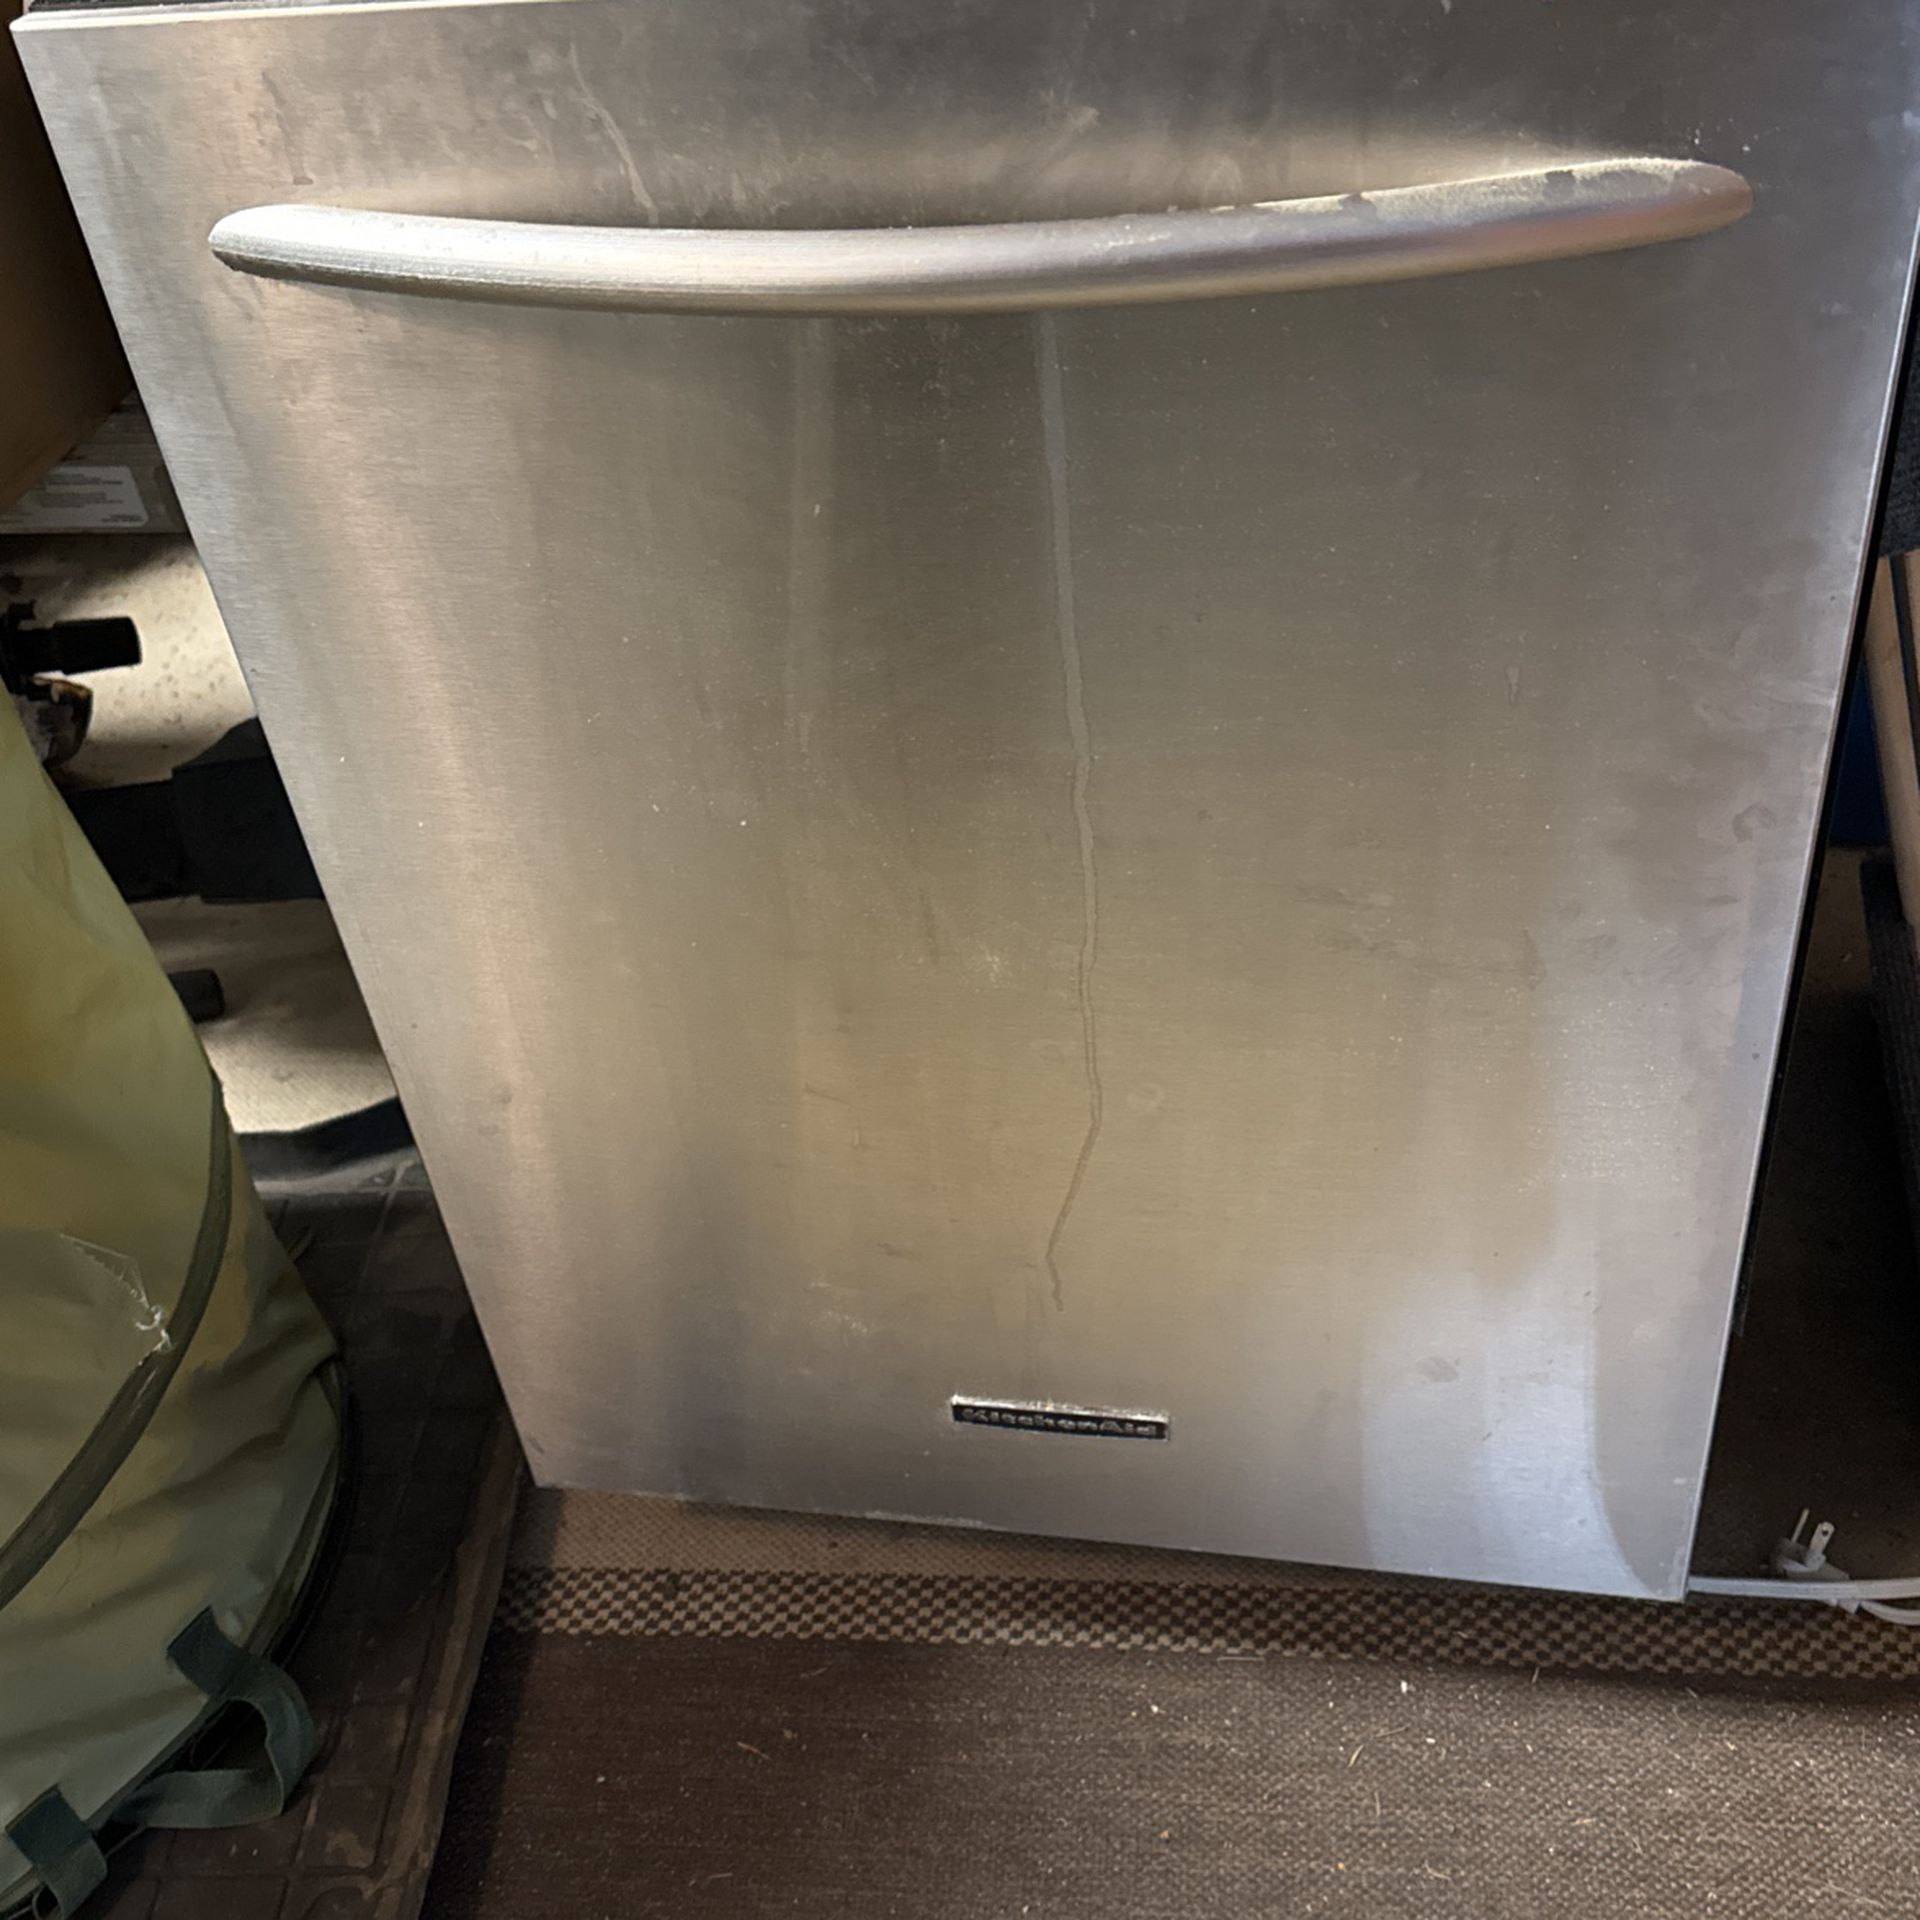 KitchenAid Stainless Dishwasher 